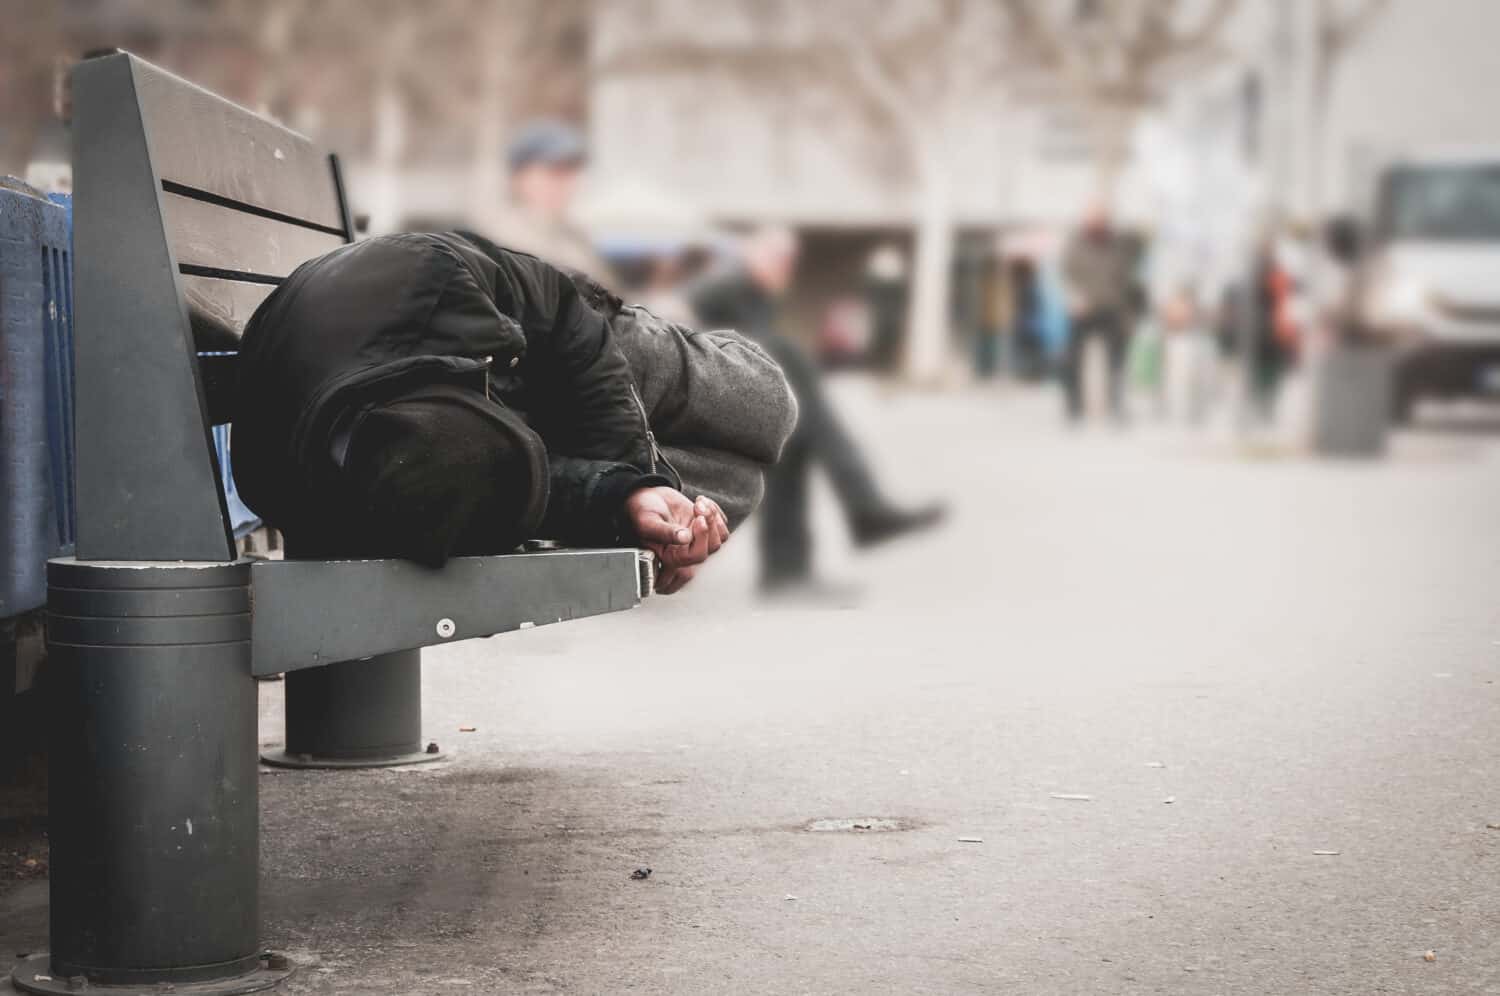 Poor tired depressed hungry homeless man by Srdjan Randjelovic